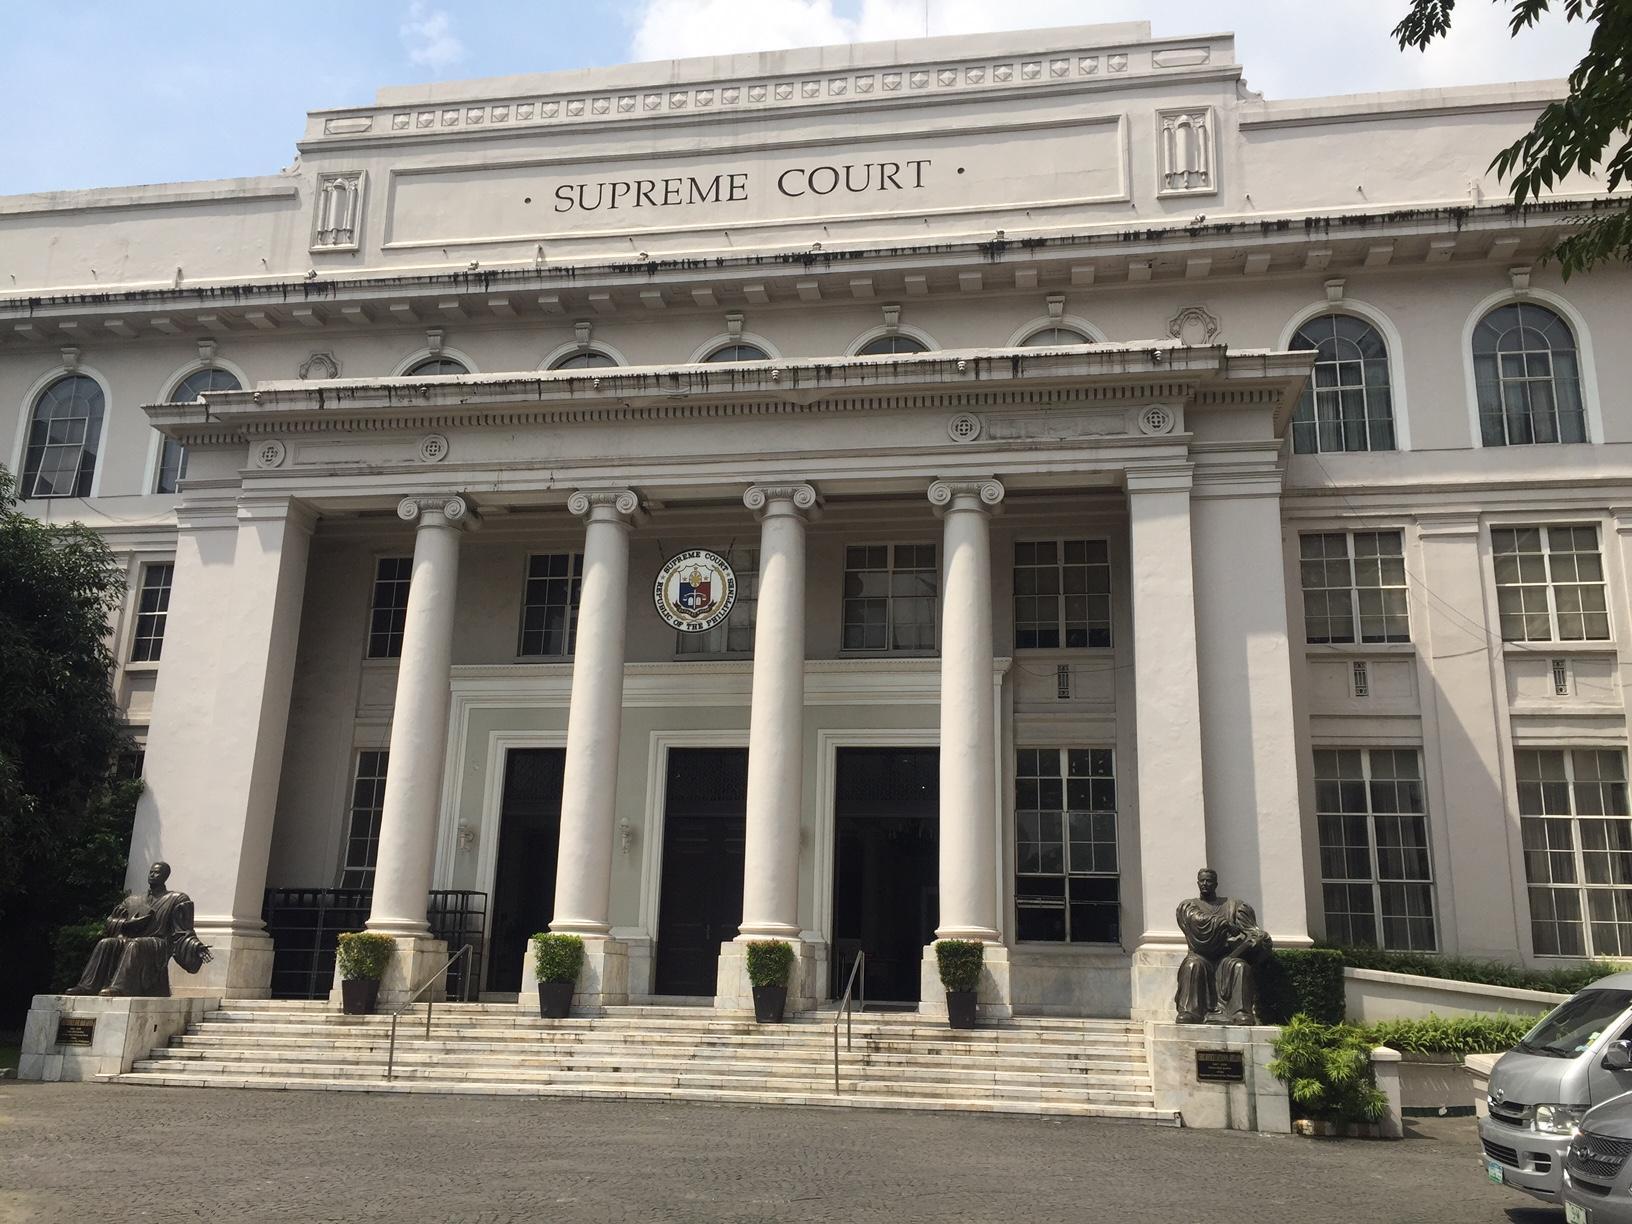 SC to remove judges" power to conduct preliminary probe -- DOJ official